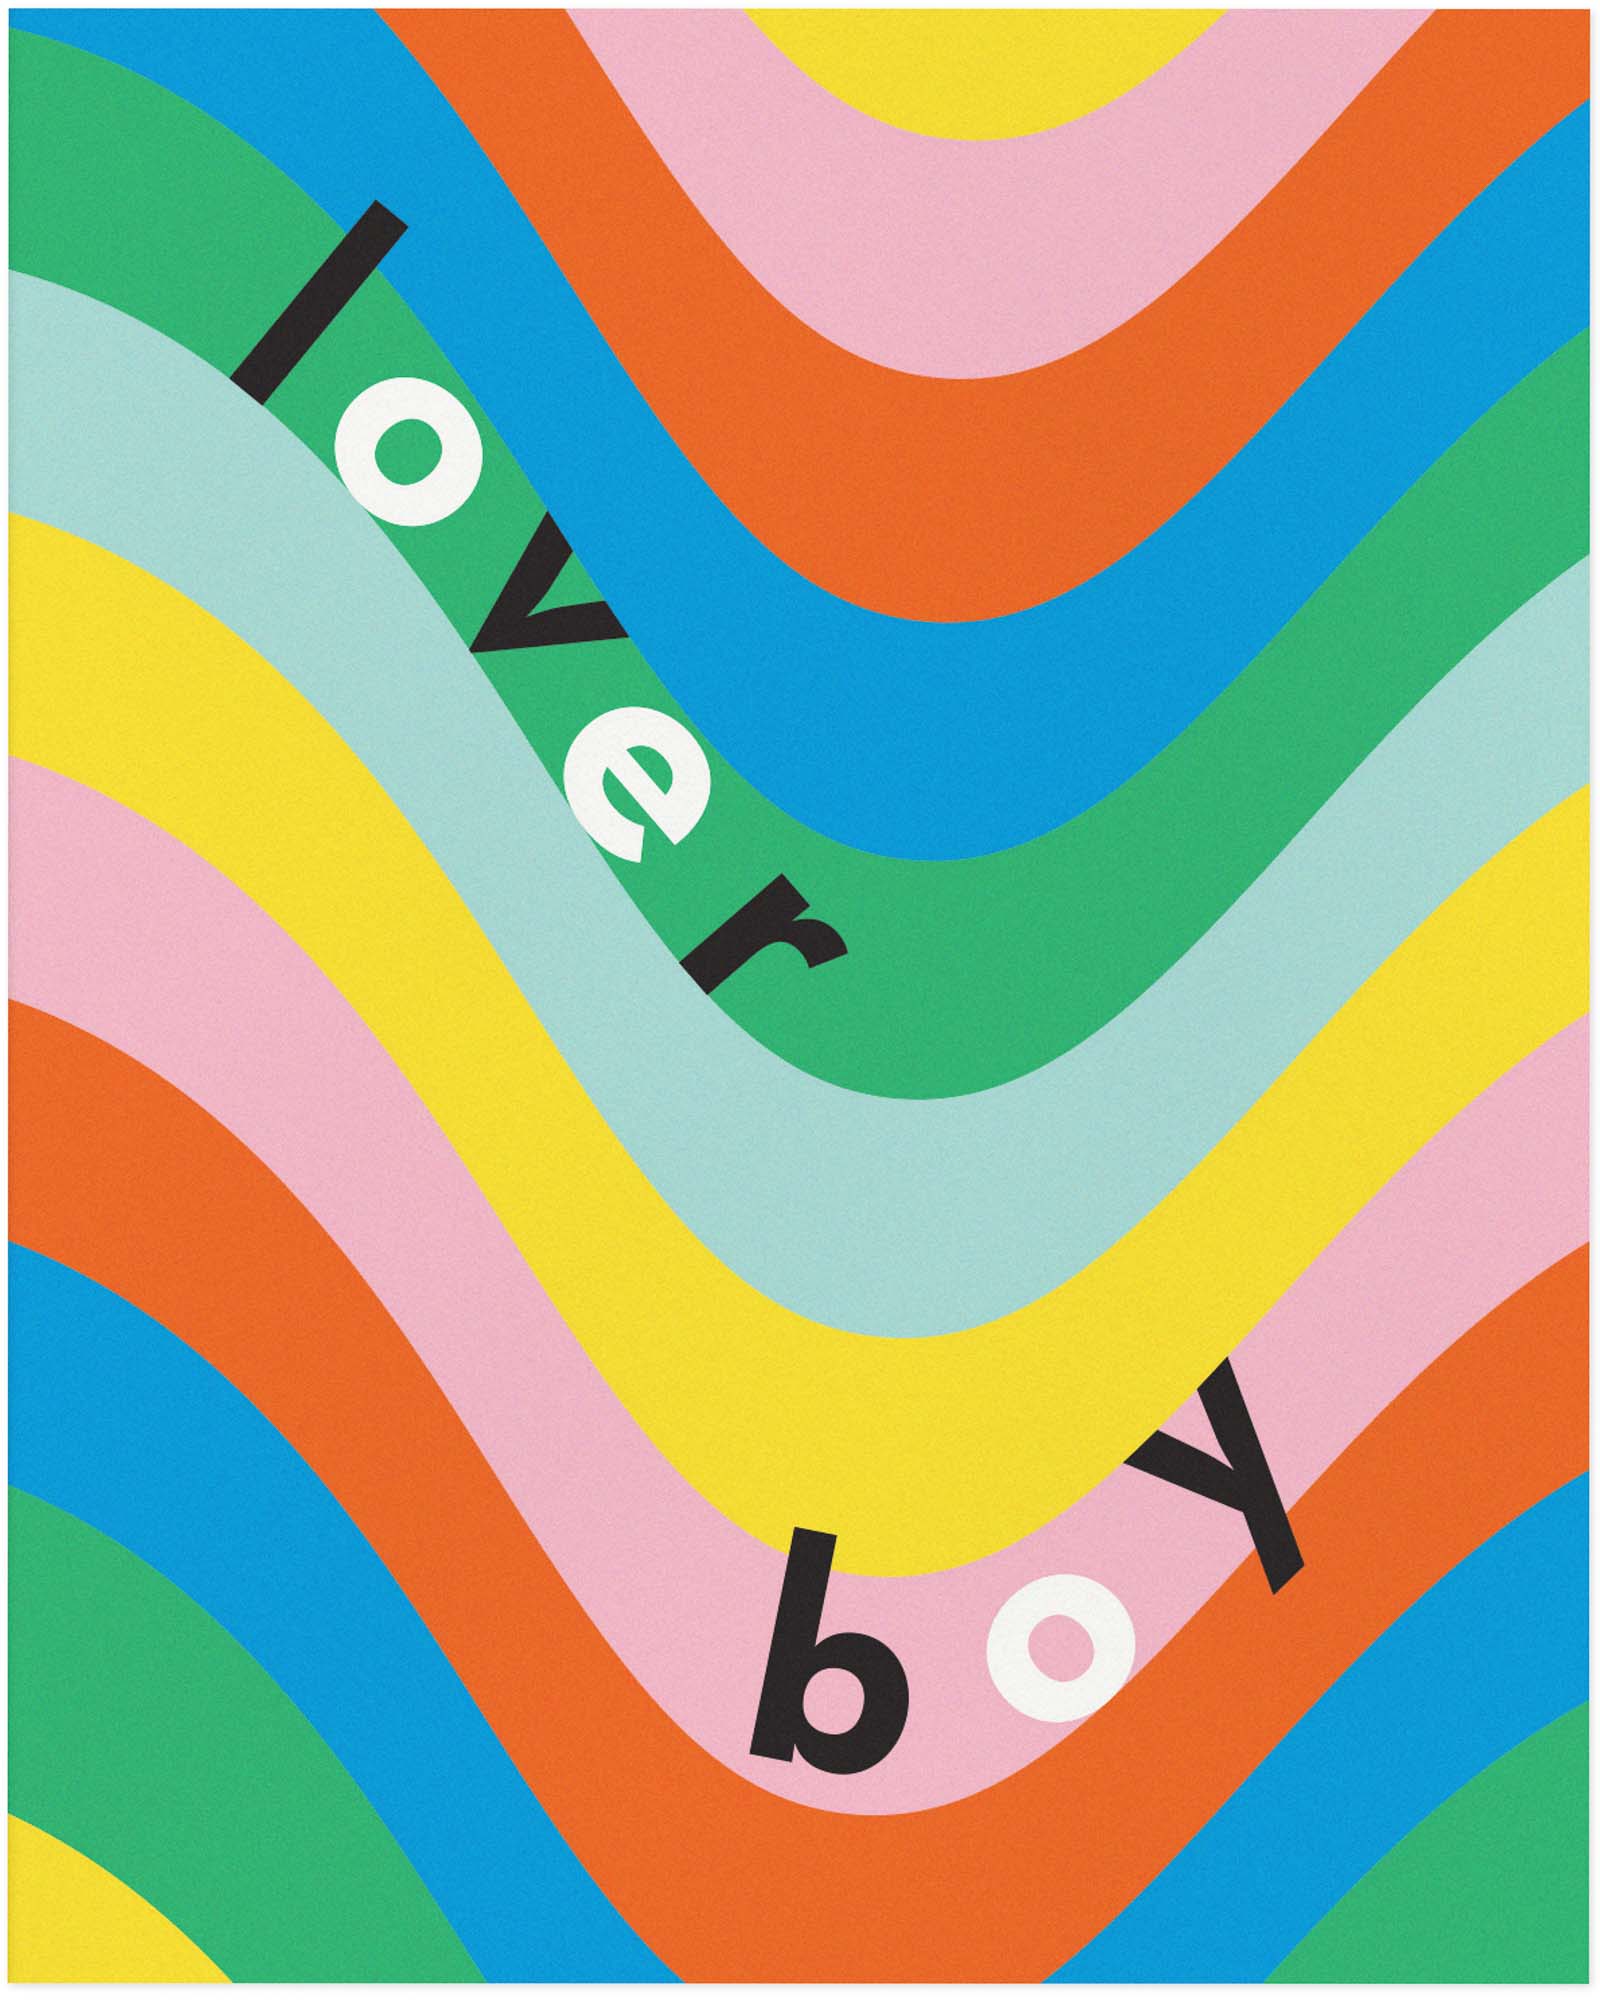 Lover Boy psychedelic typographic swirly rainbow archival giclée art print. Made in USA by My Darlin' @mydarlin_bk